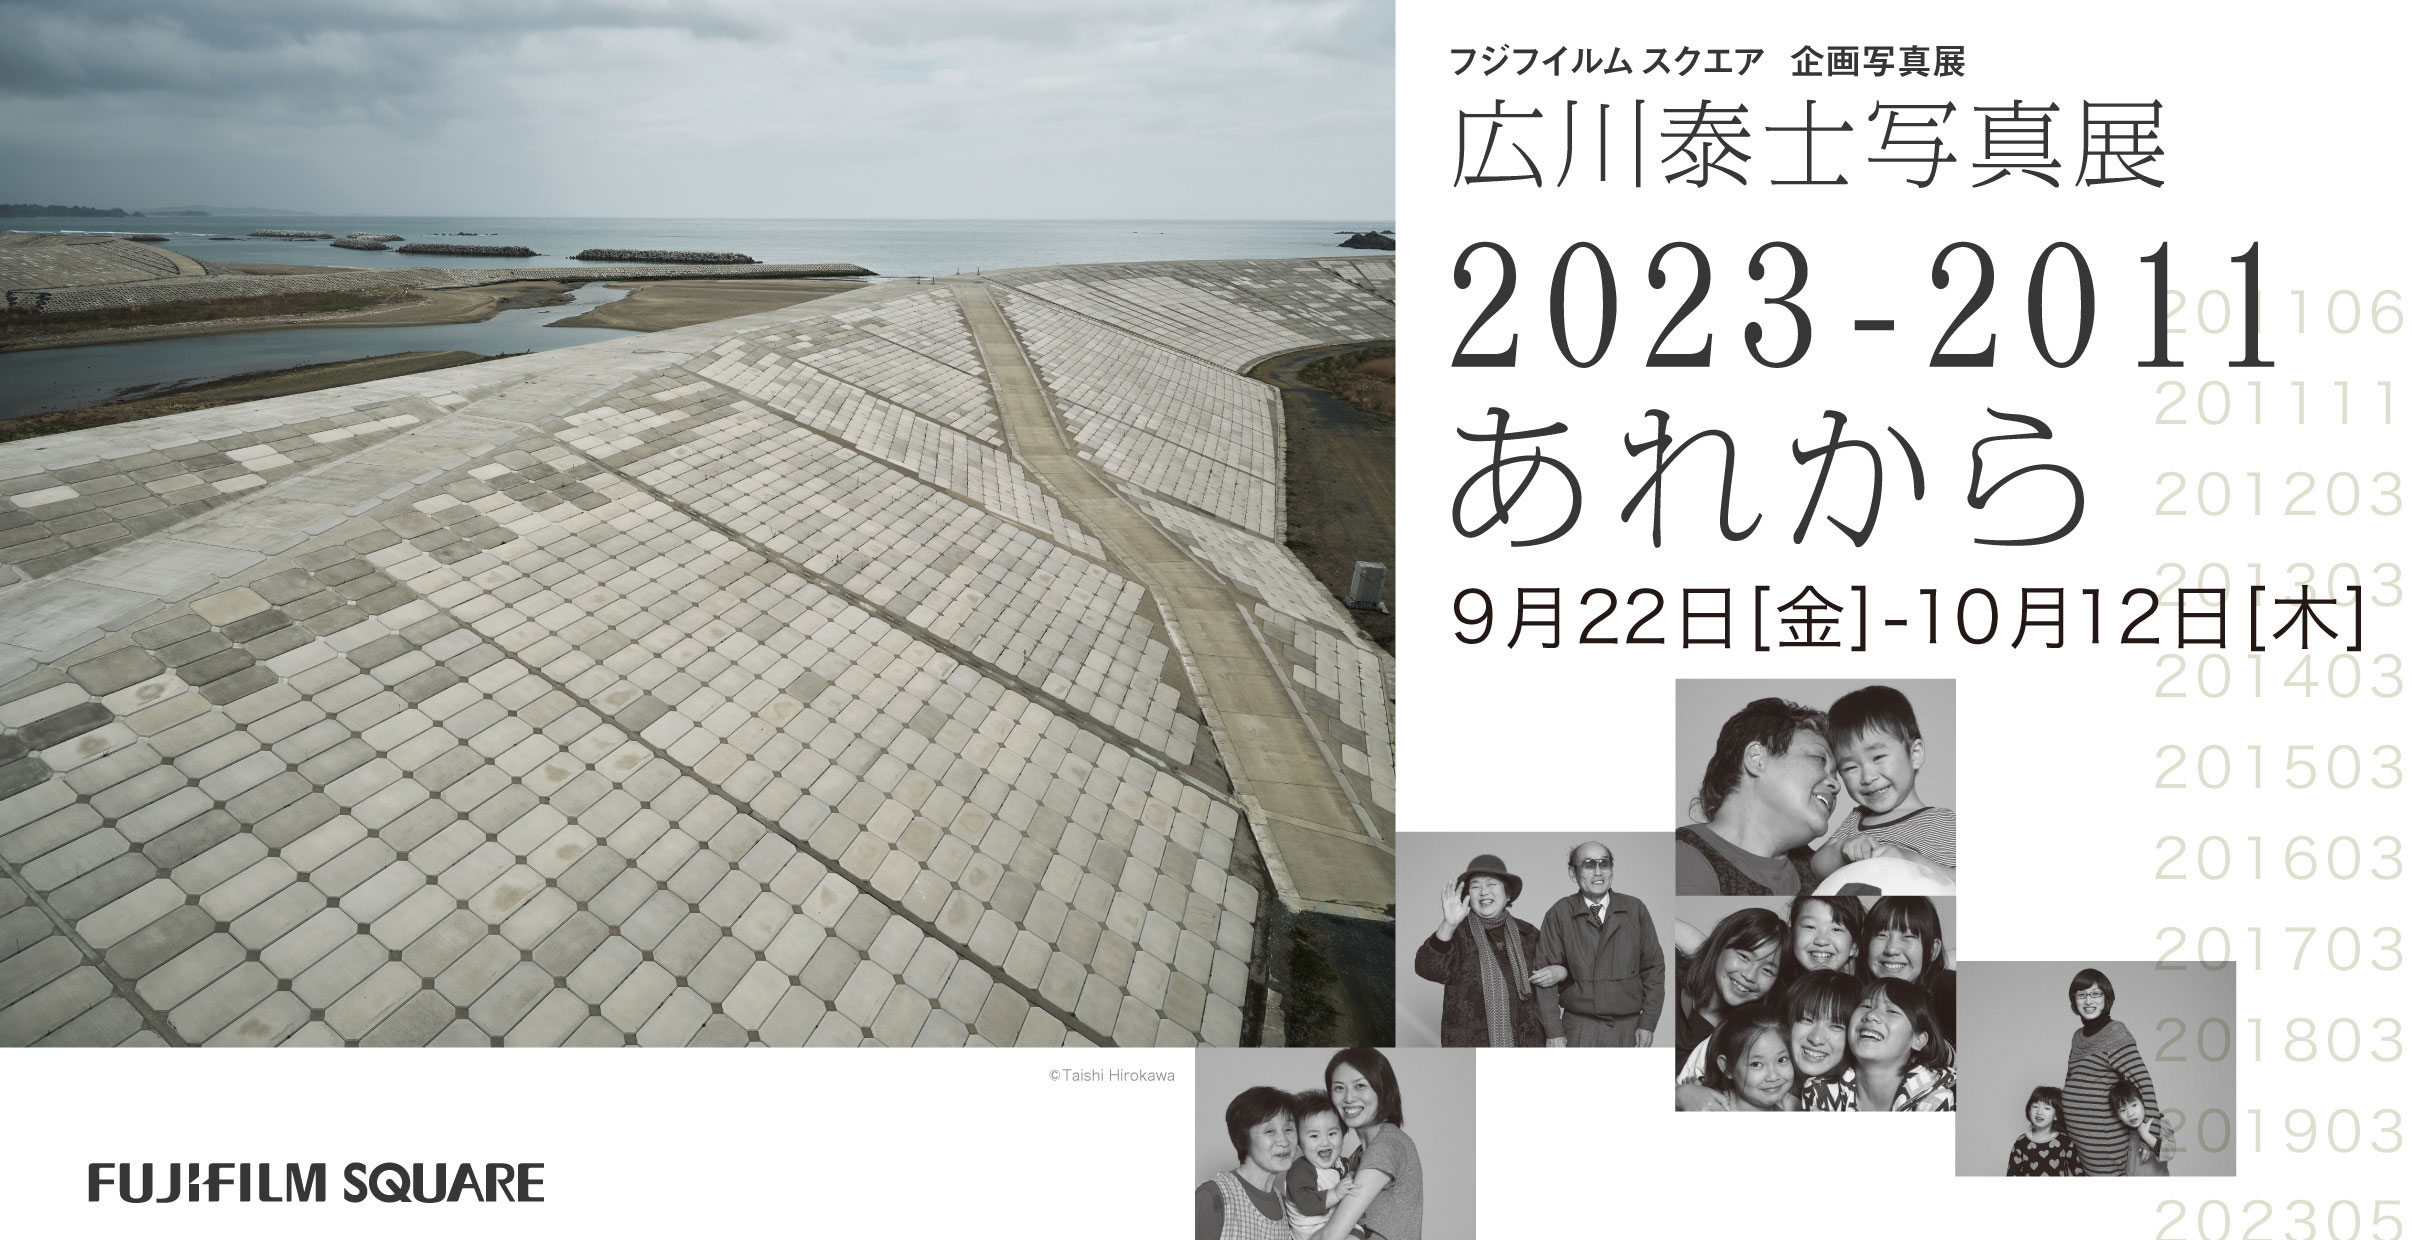 [image]広川泰士写真展「2023-2011 あれから」